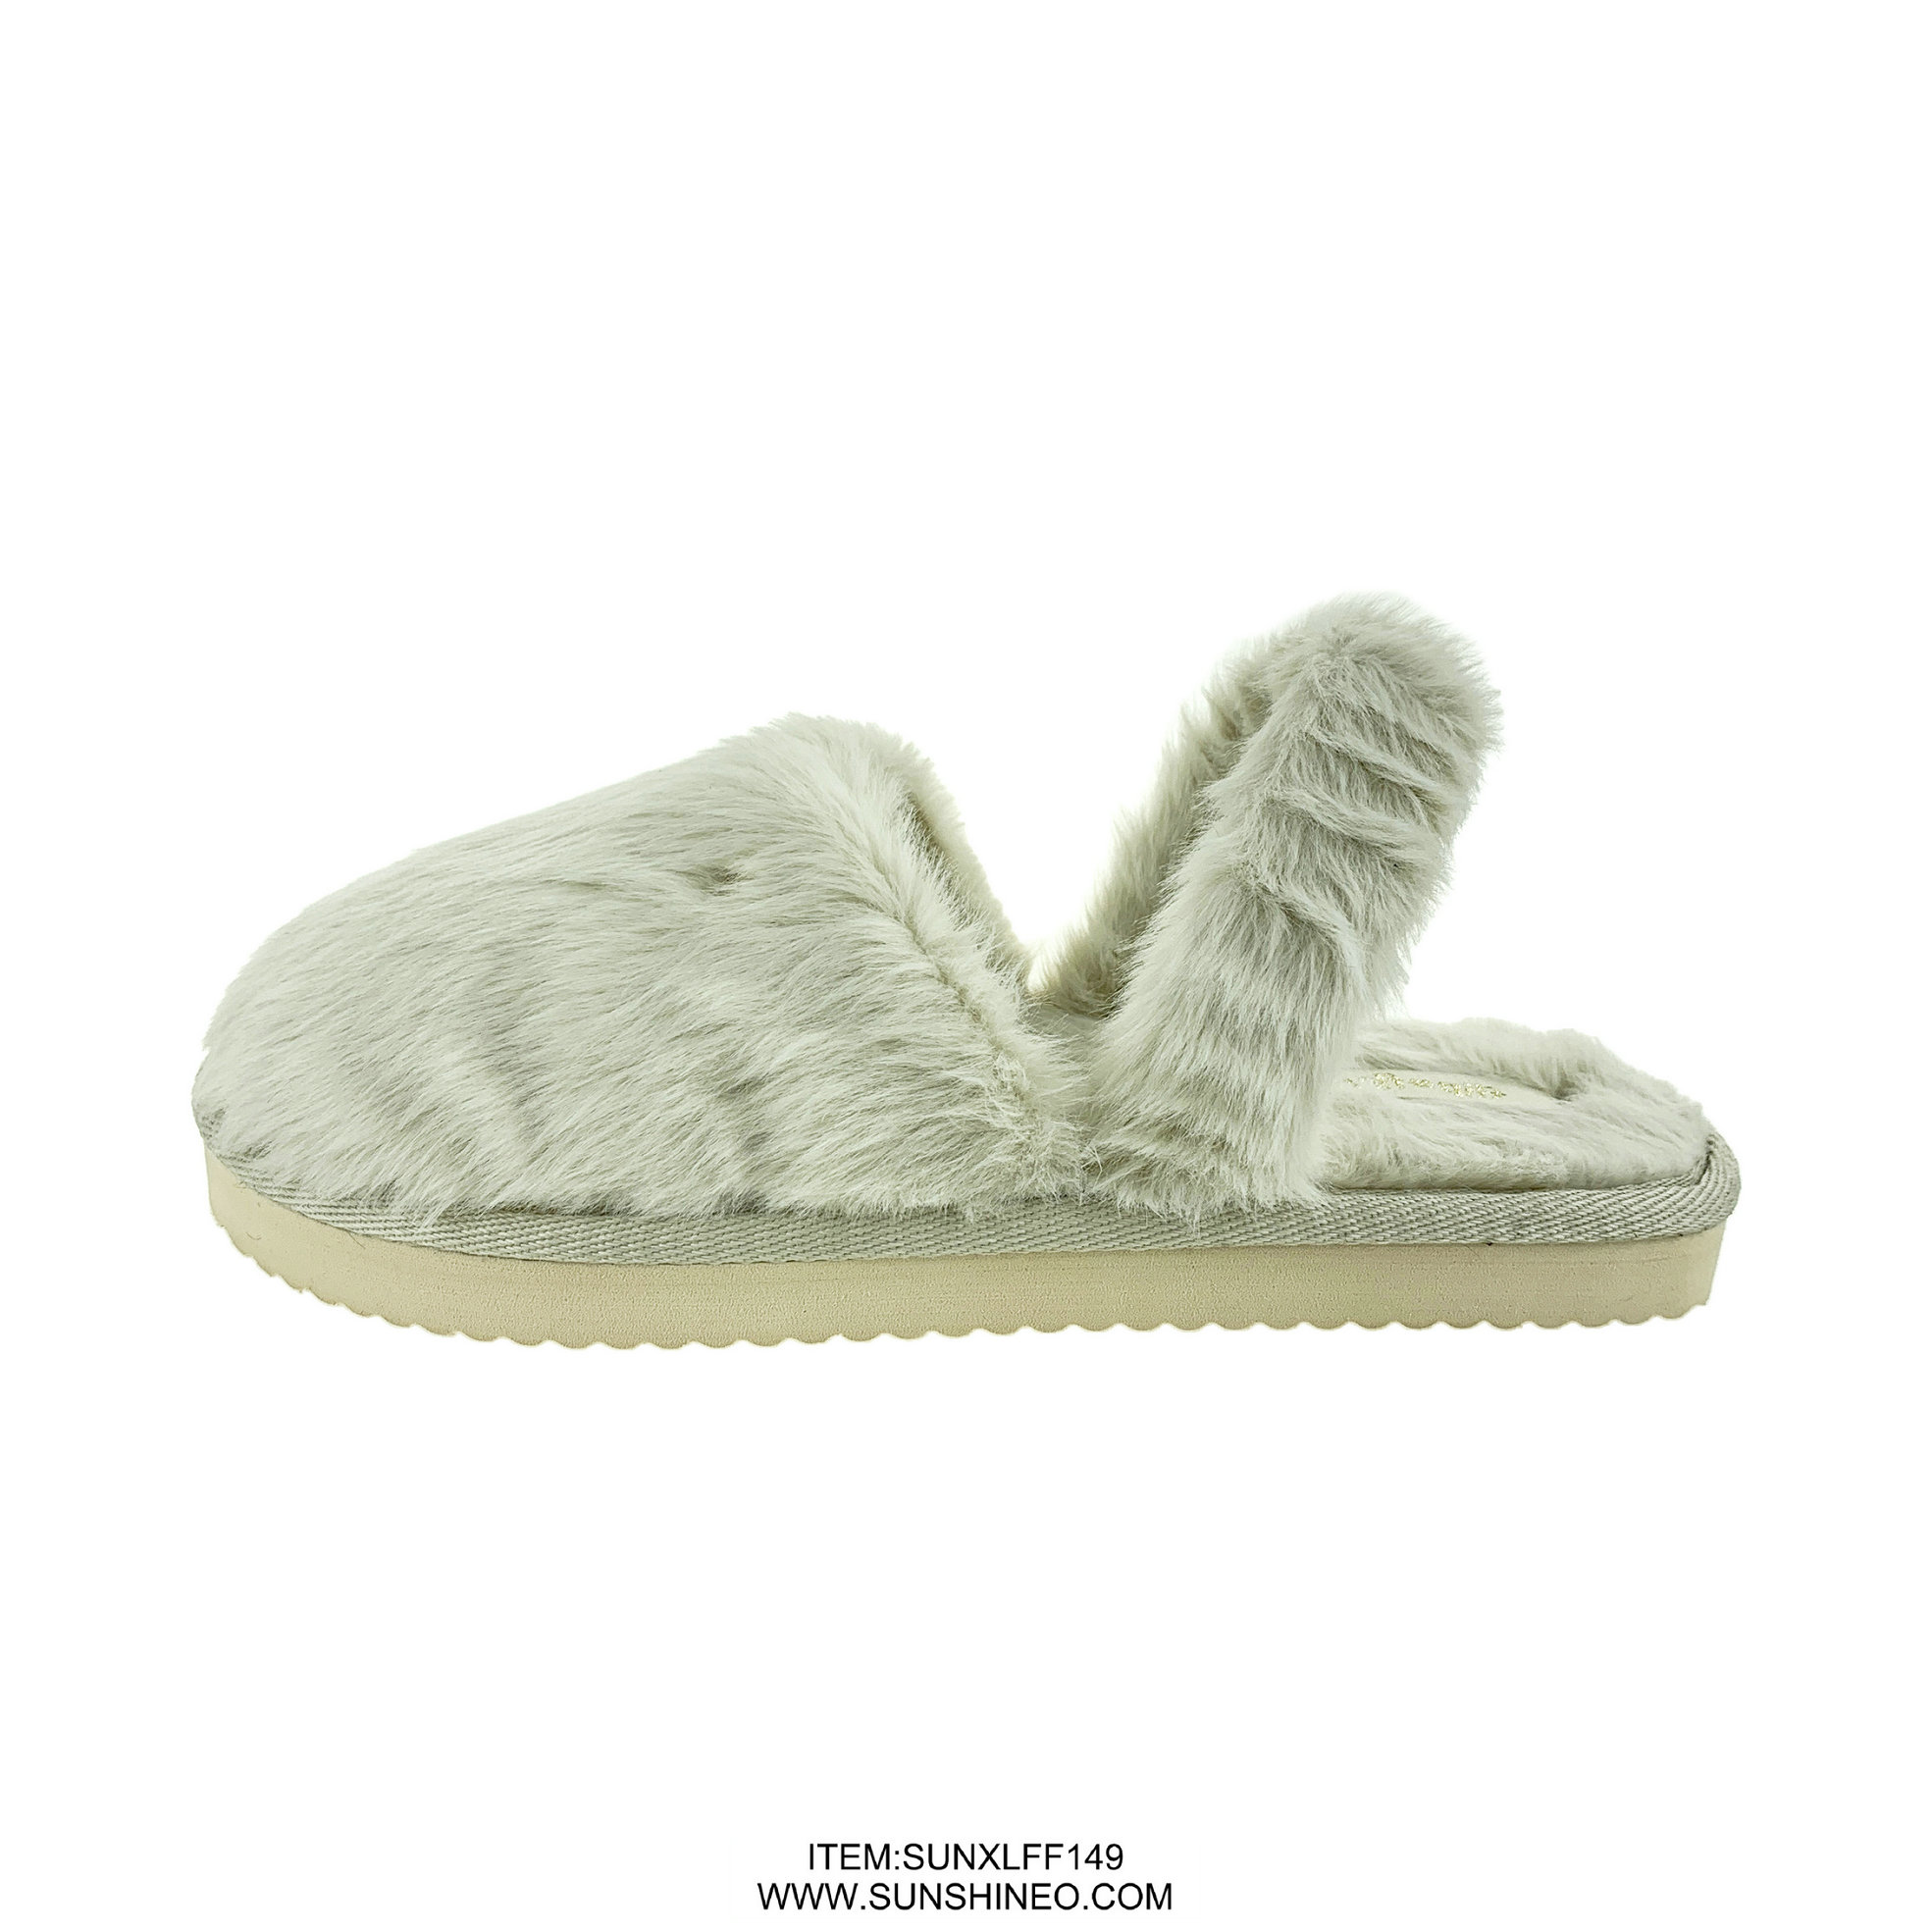 SUNXLFF149 fur flip flop sandals winter slippers